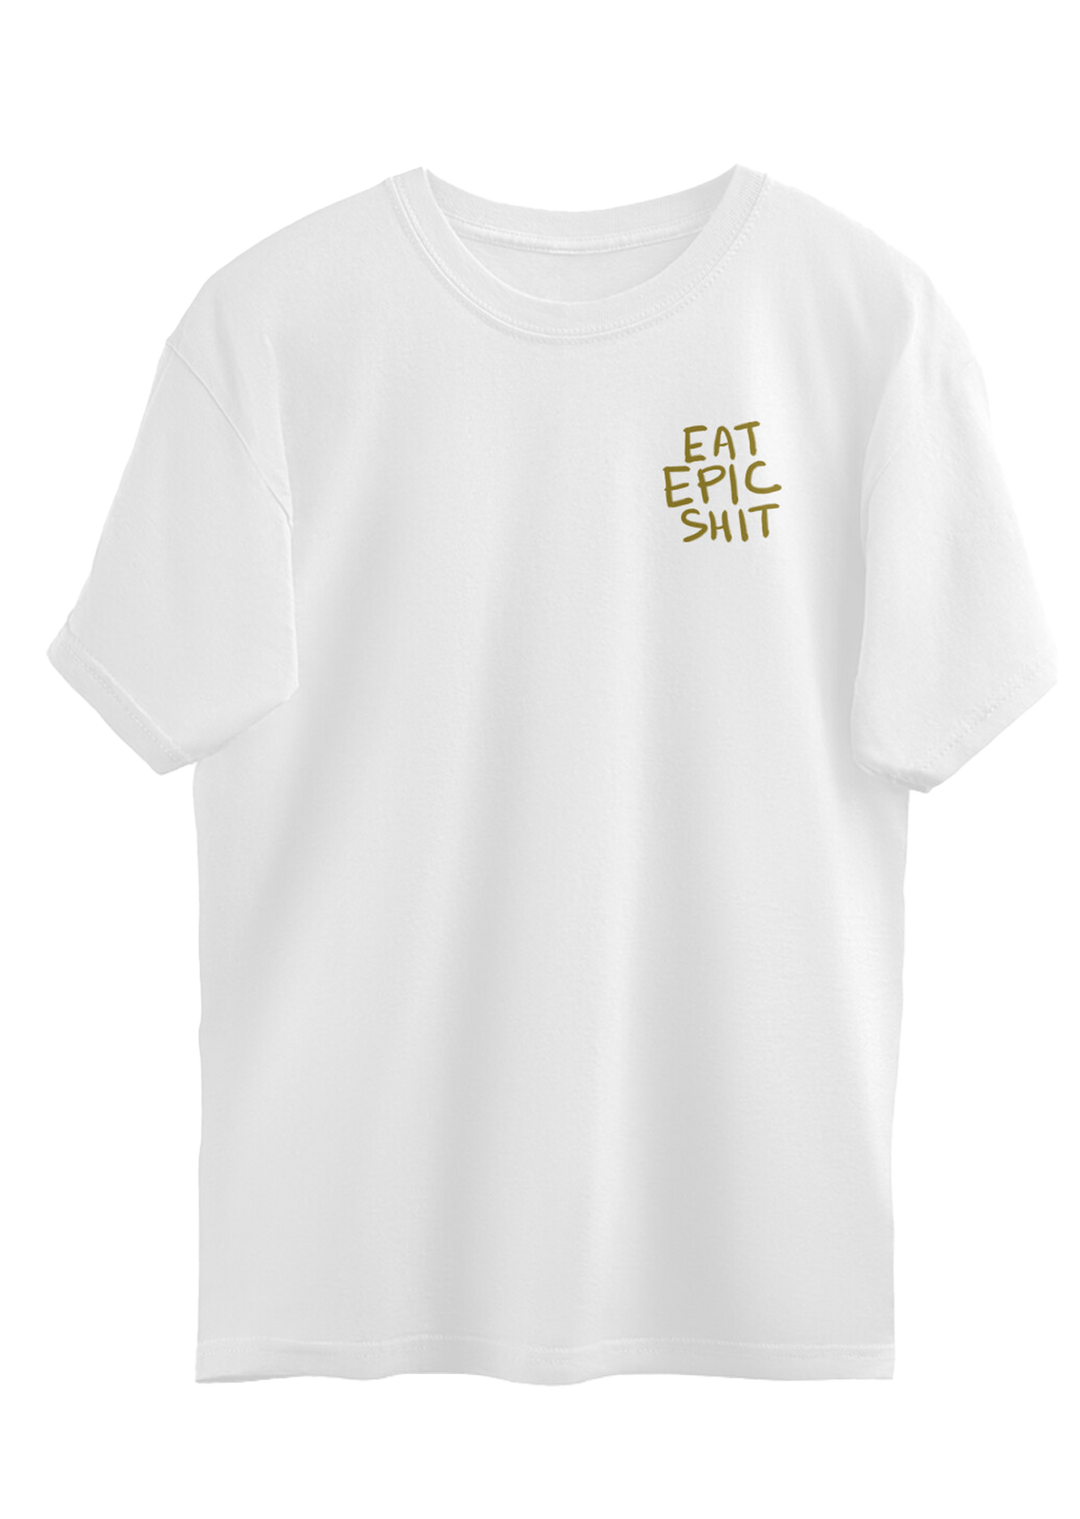 Eat Epic Shit (Dung Beetle) Oversized T-shirt